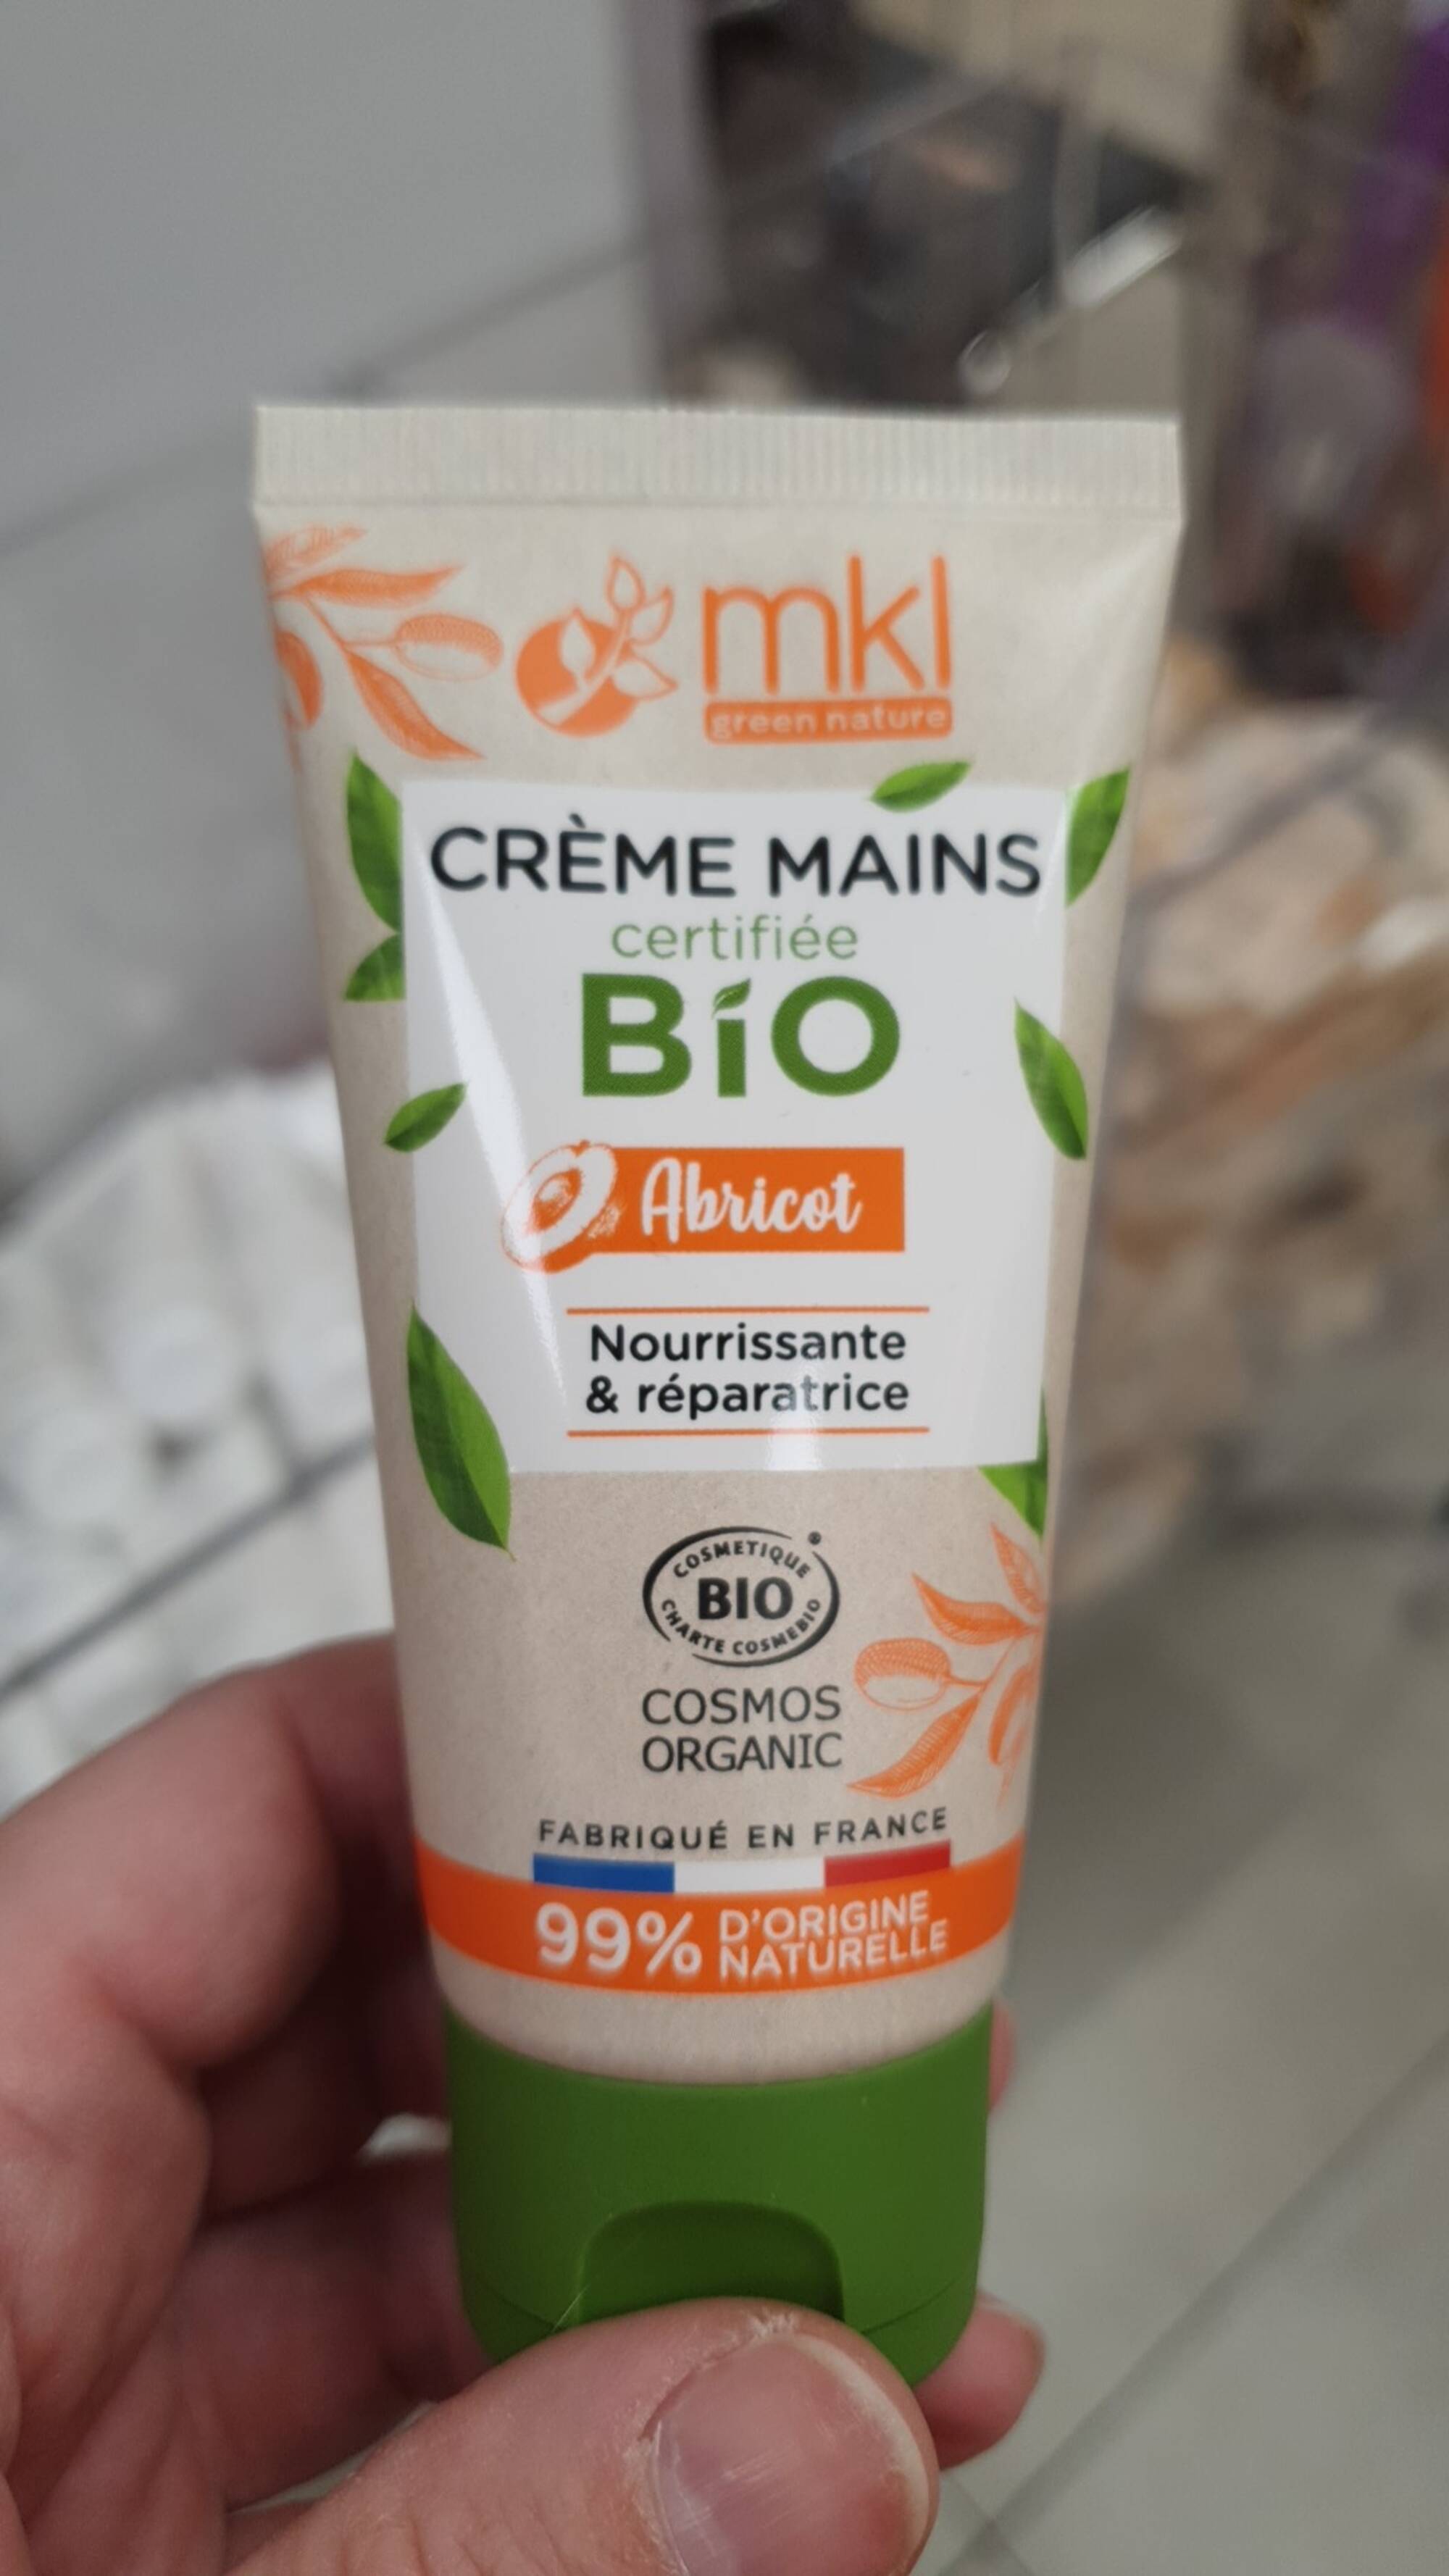 MKL - Crème mains abricot bio